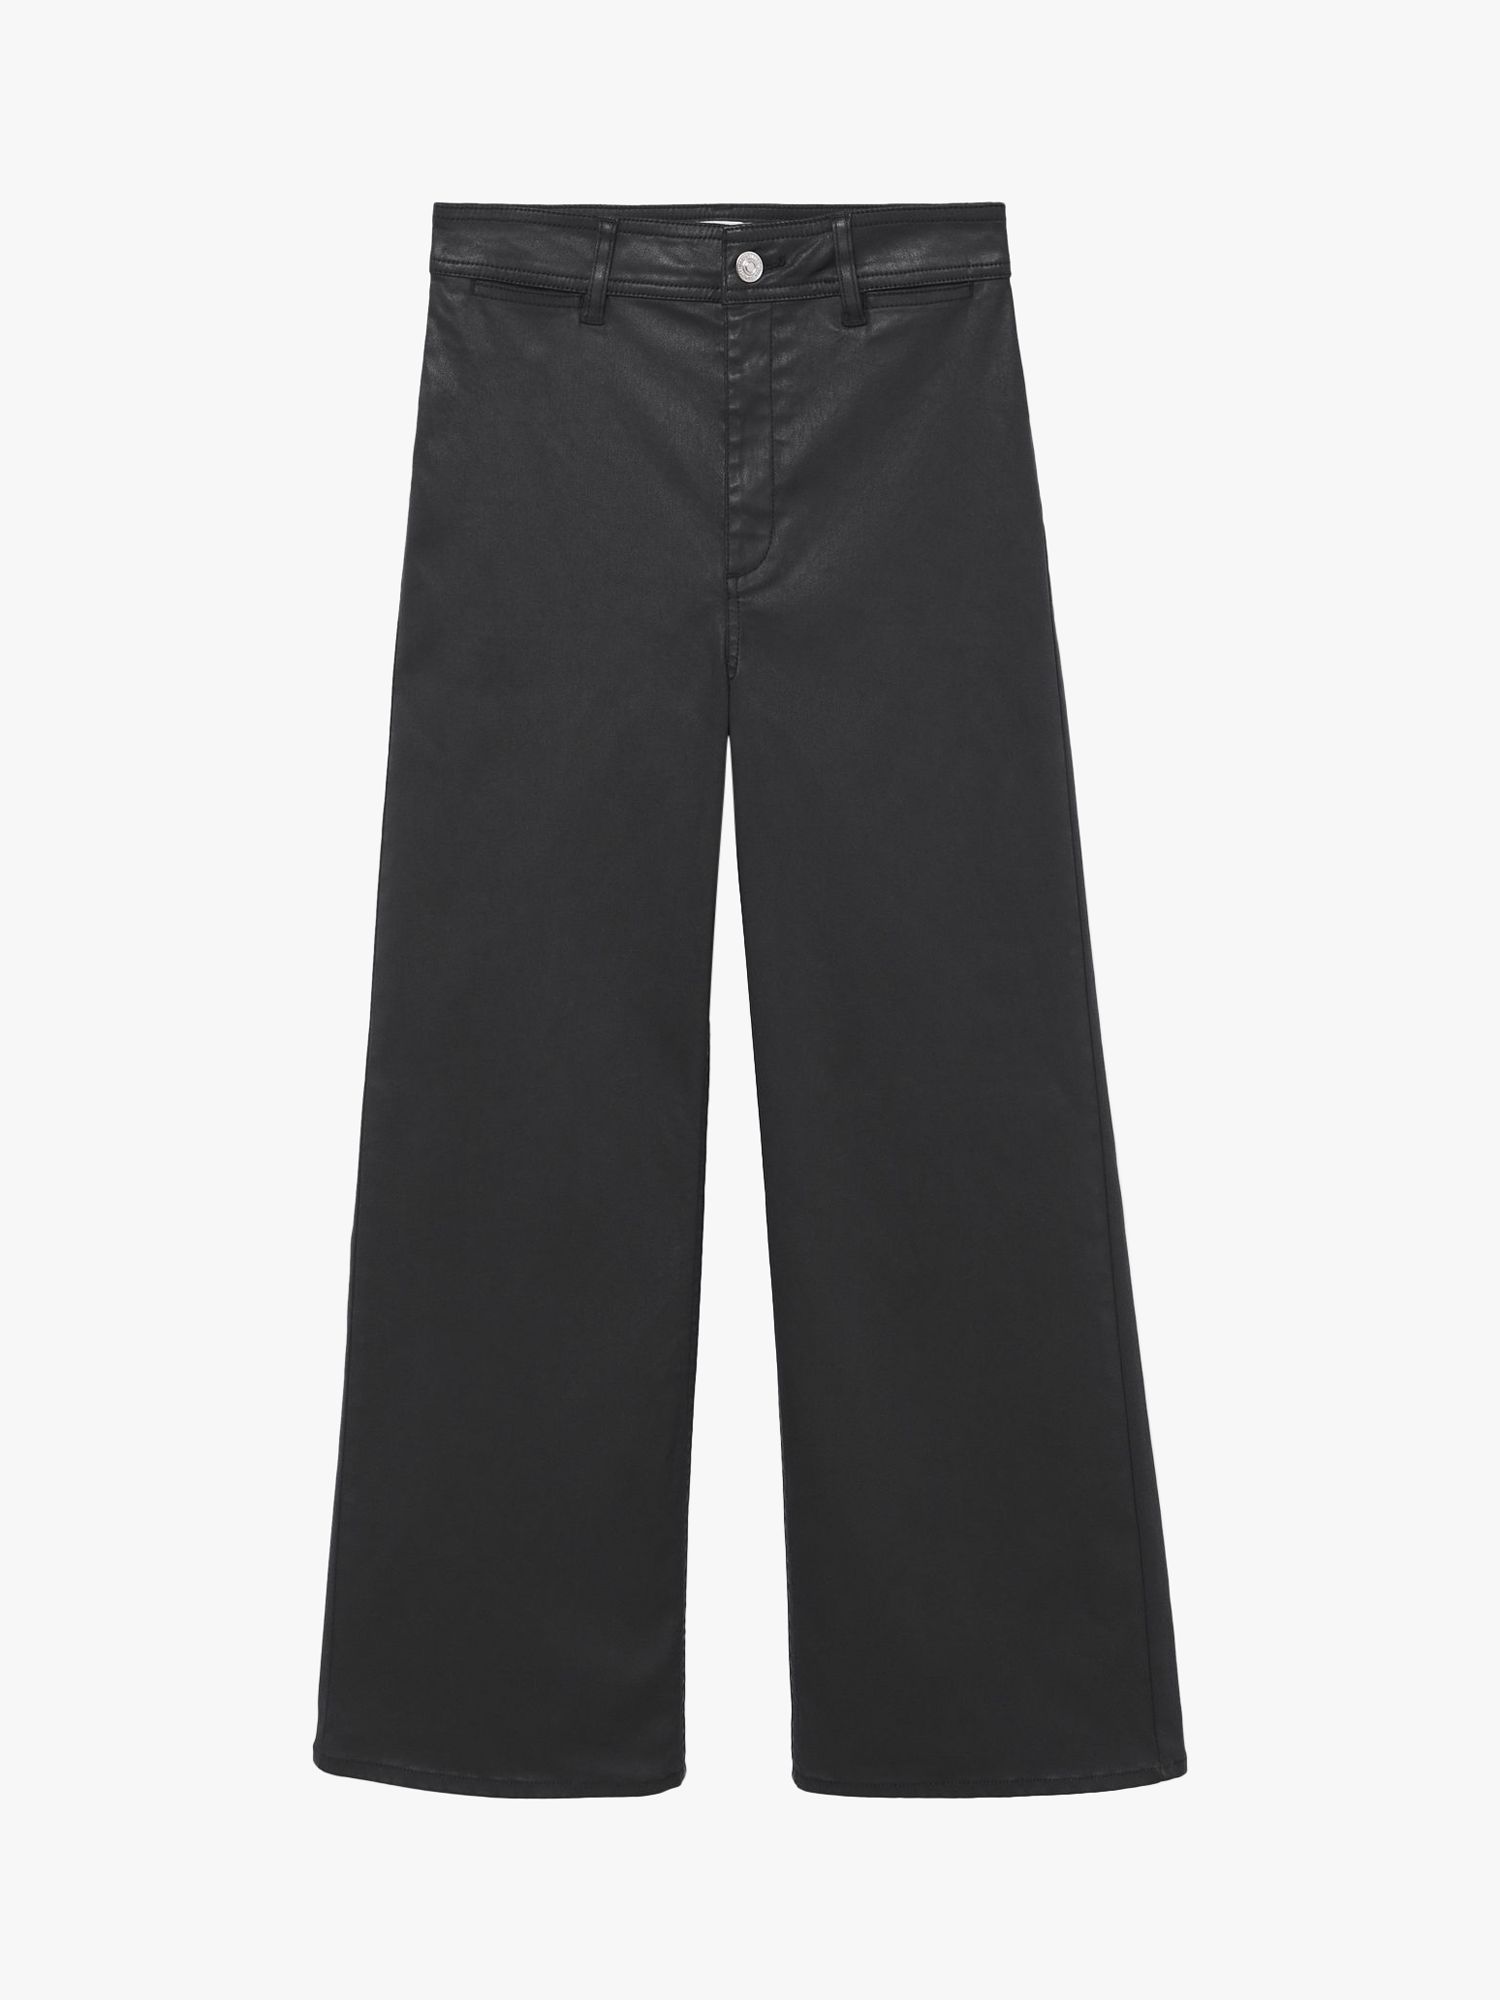 Mango Catherine High Waist Waxed Denim Jeans, Black, 4